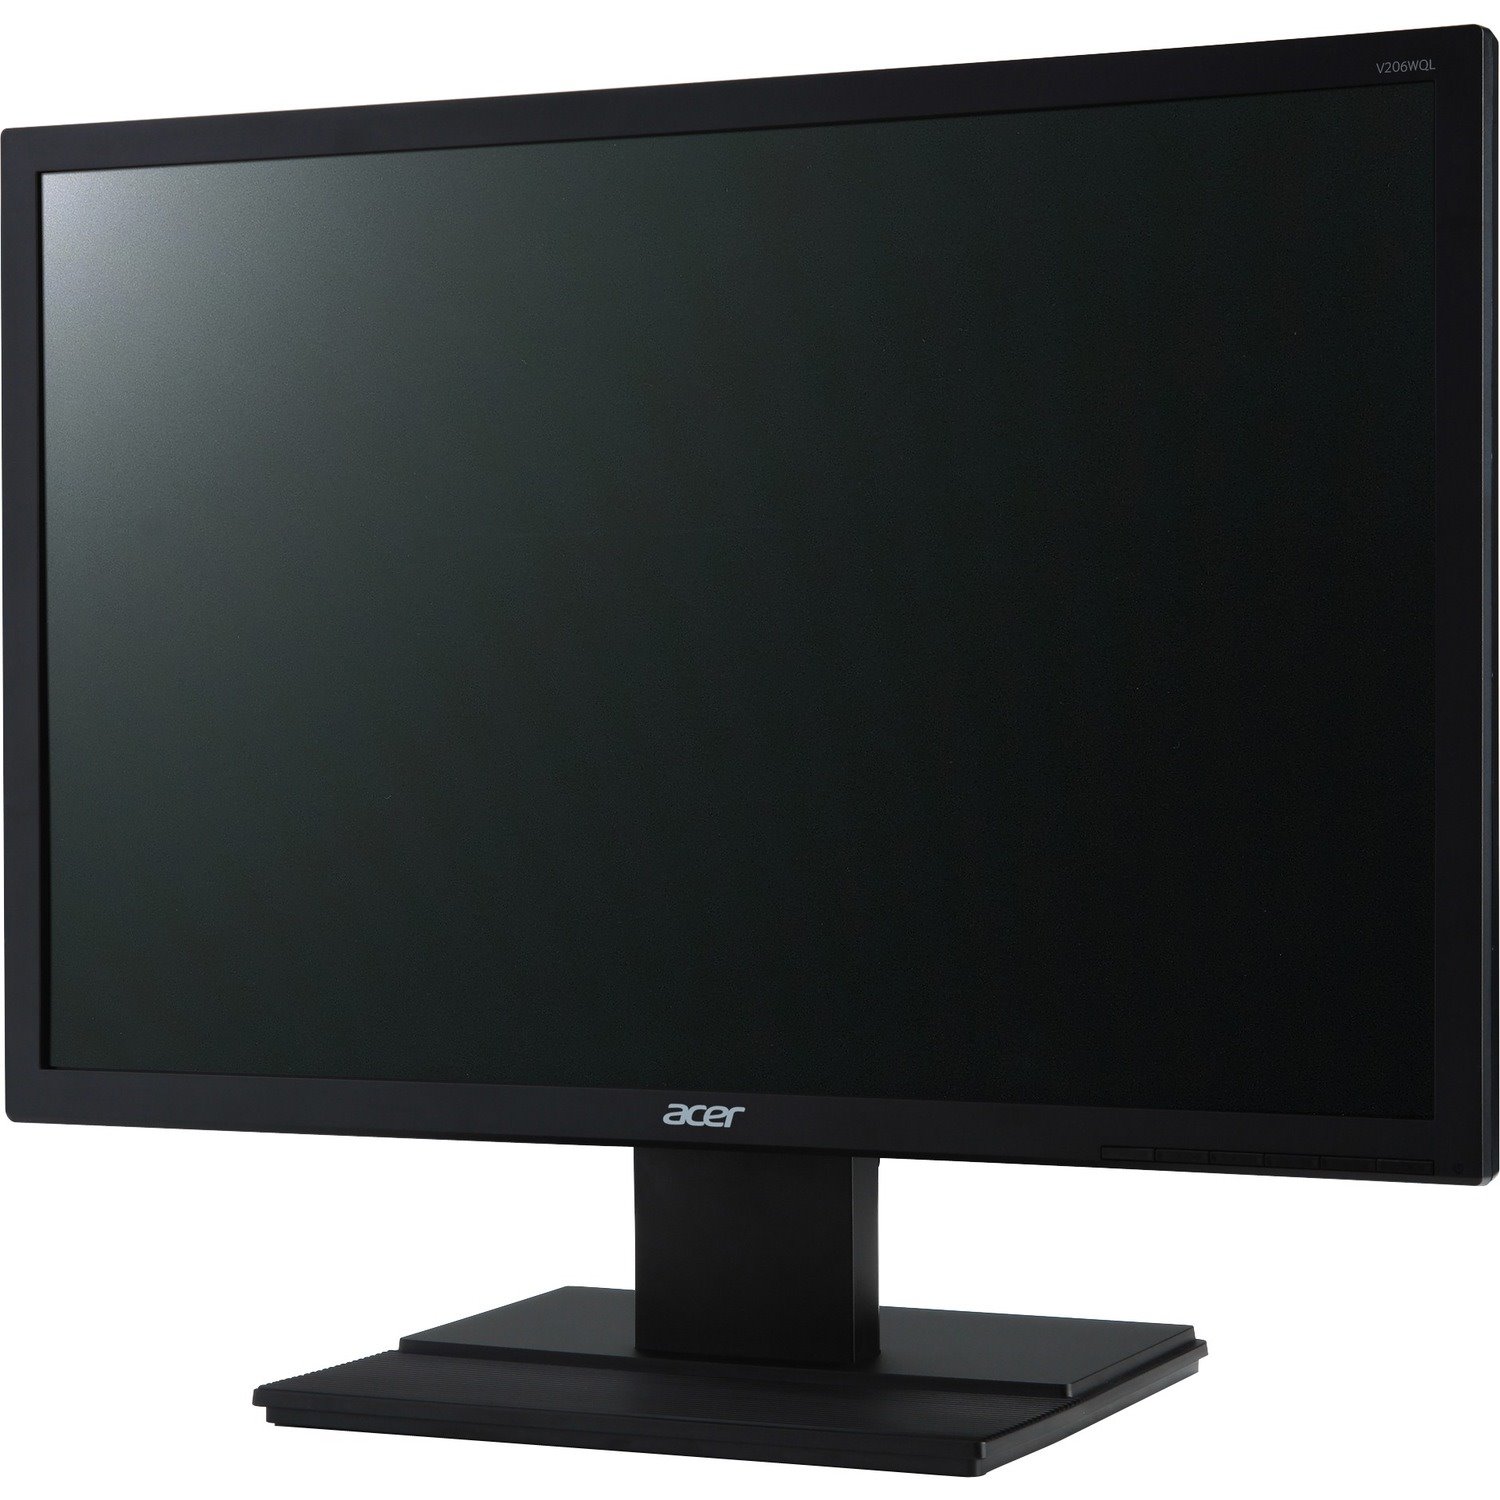 Acer V206WQL 19.5" LED LCD Monitor - 16:10 - 5ms - Free 3 year Warranty